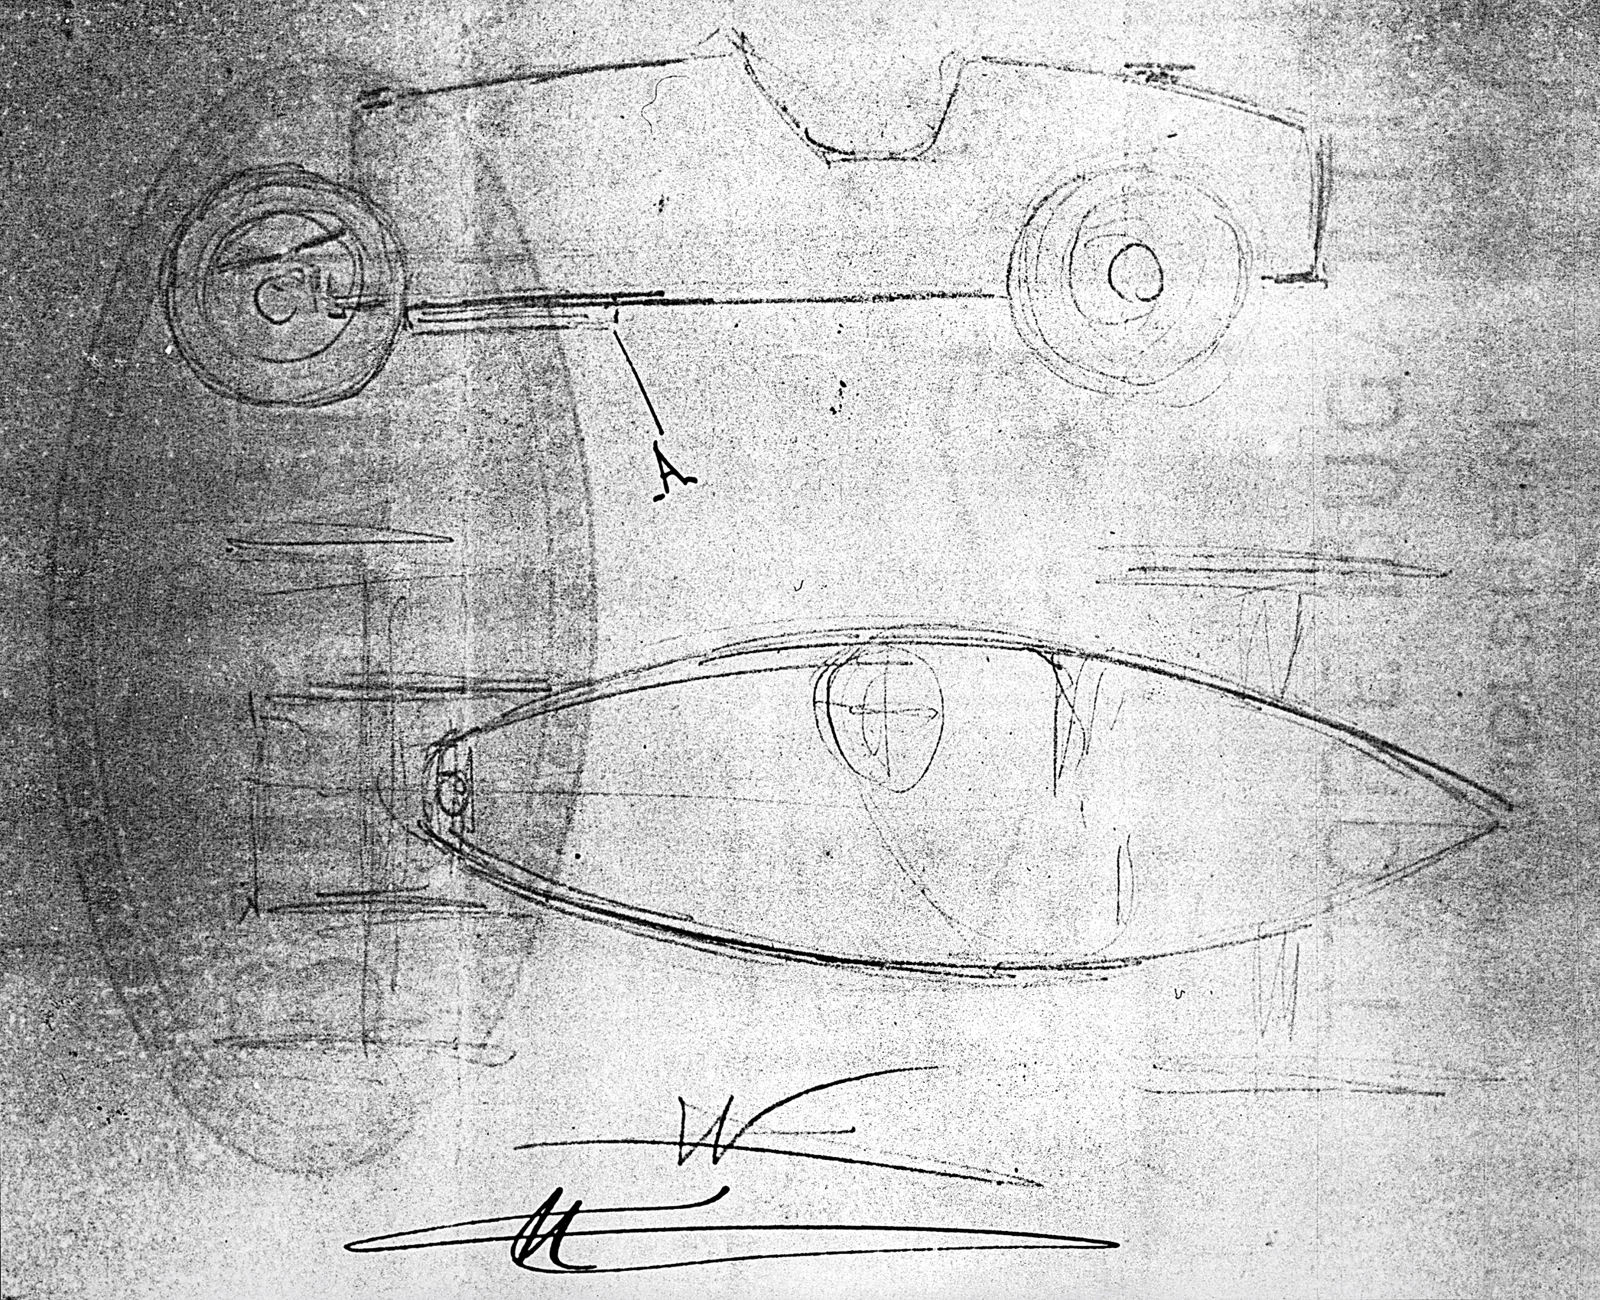 07 BUGATTI_Type 35 Centenary SemanalClásico - Revista online de coches clásicos, de colección y sport - bugatti